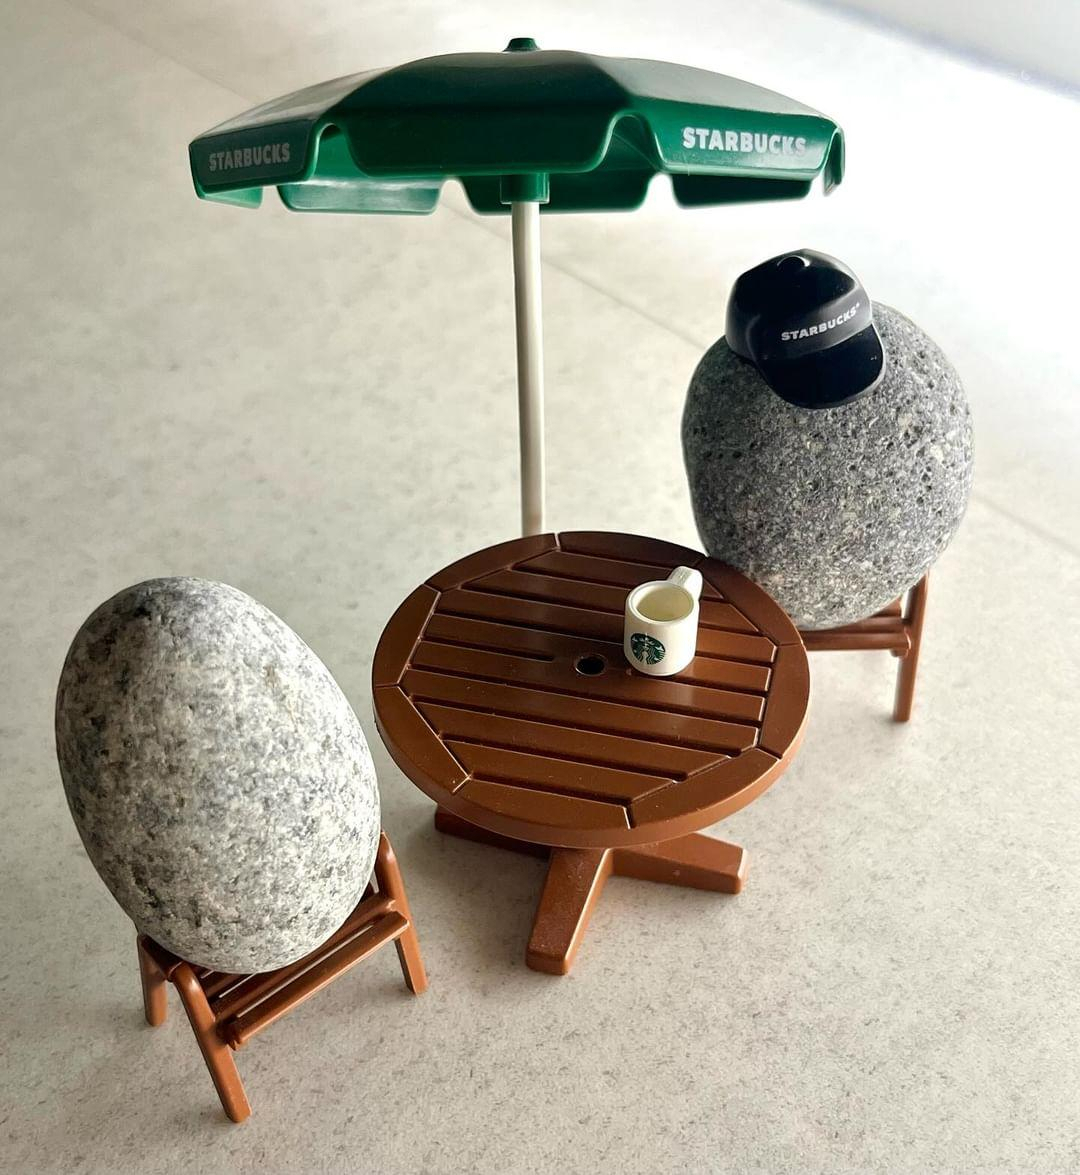 Pet stones with Starbucks-themed miniature props (Courtesy of Ji-eunnnn7 on Instagram)